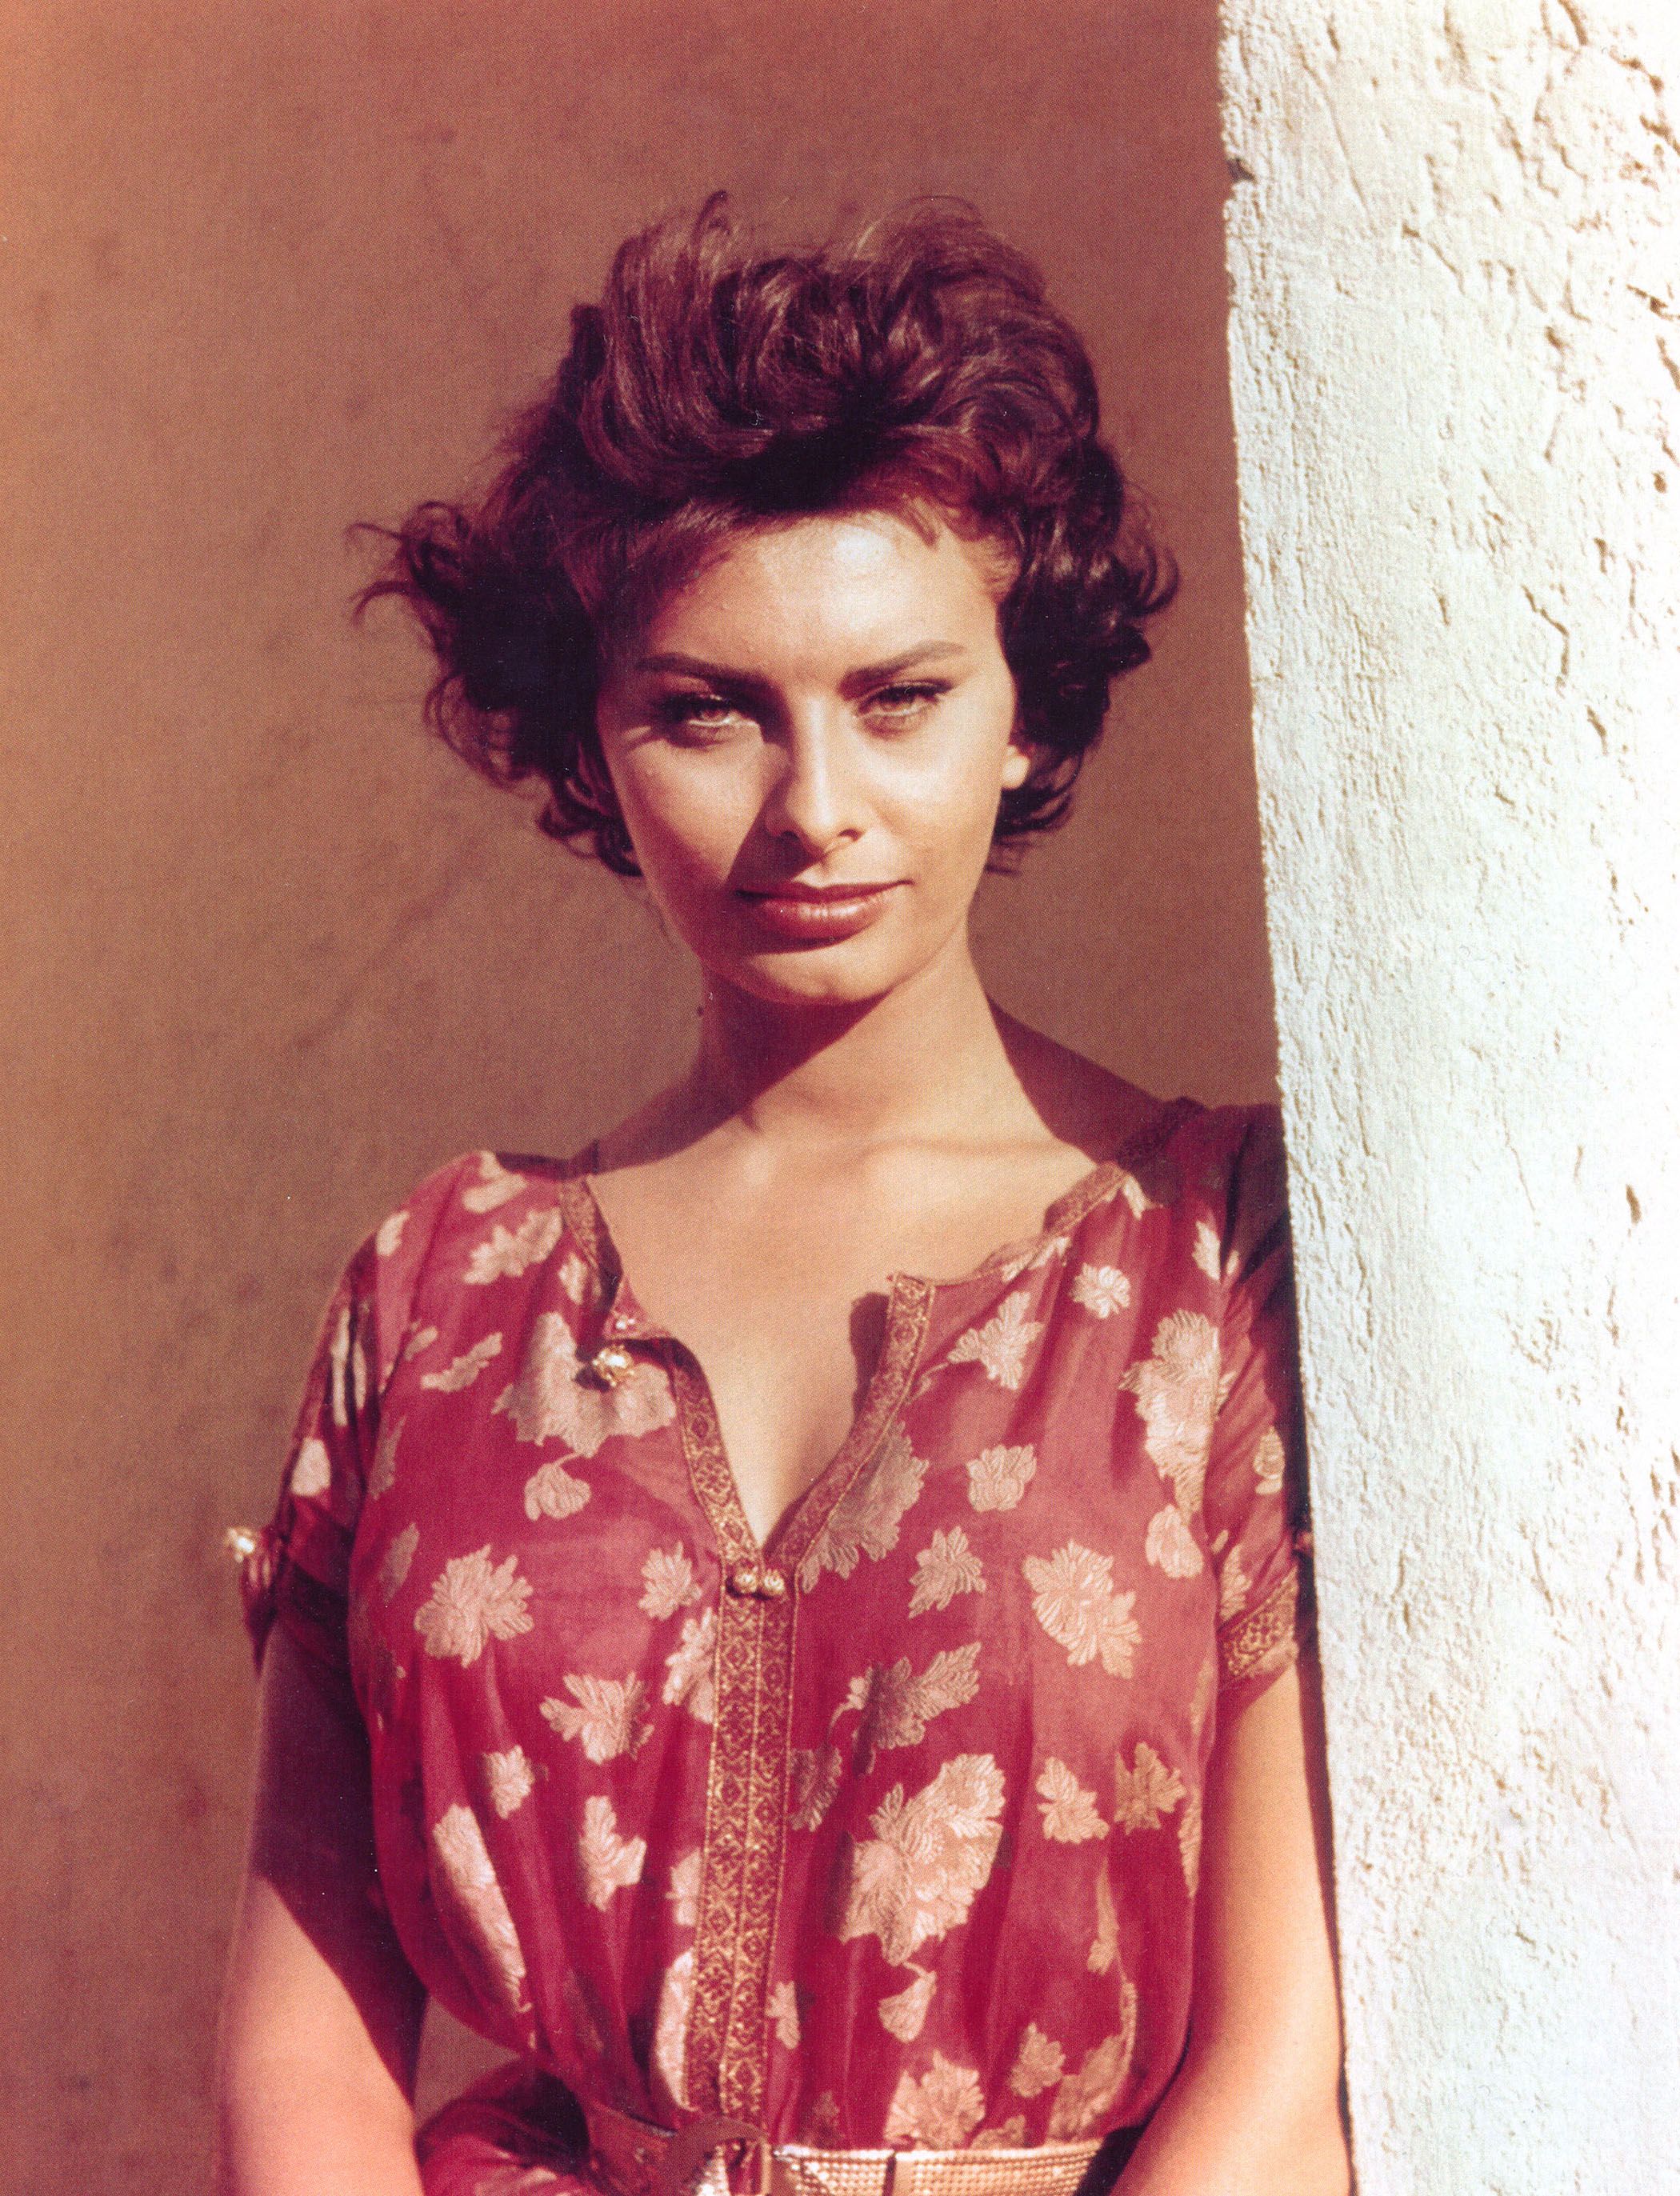 Sophia Loren photo 501 of 929 pics, wallpaper - photo #374249 - ThePlace2